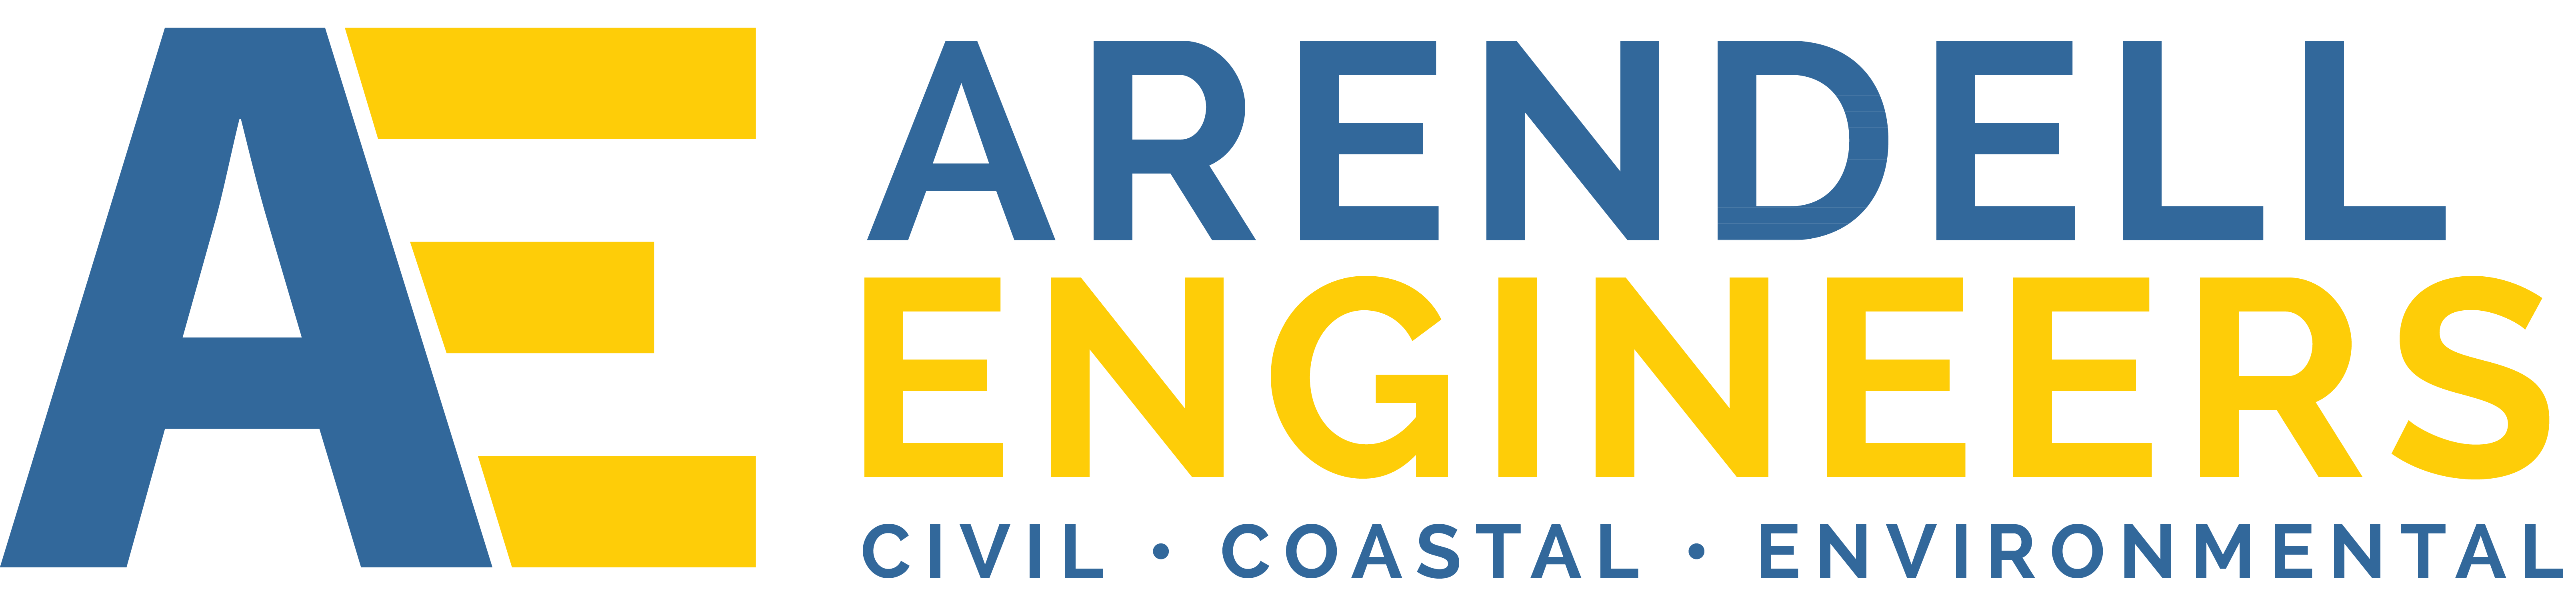 Arendell Engineers logo